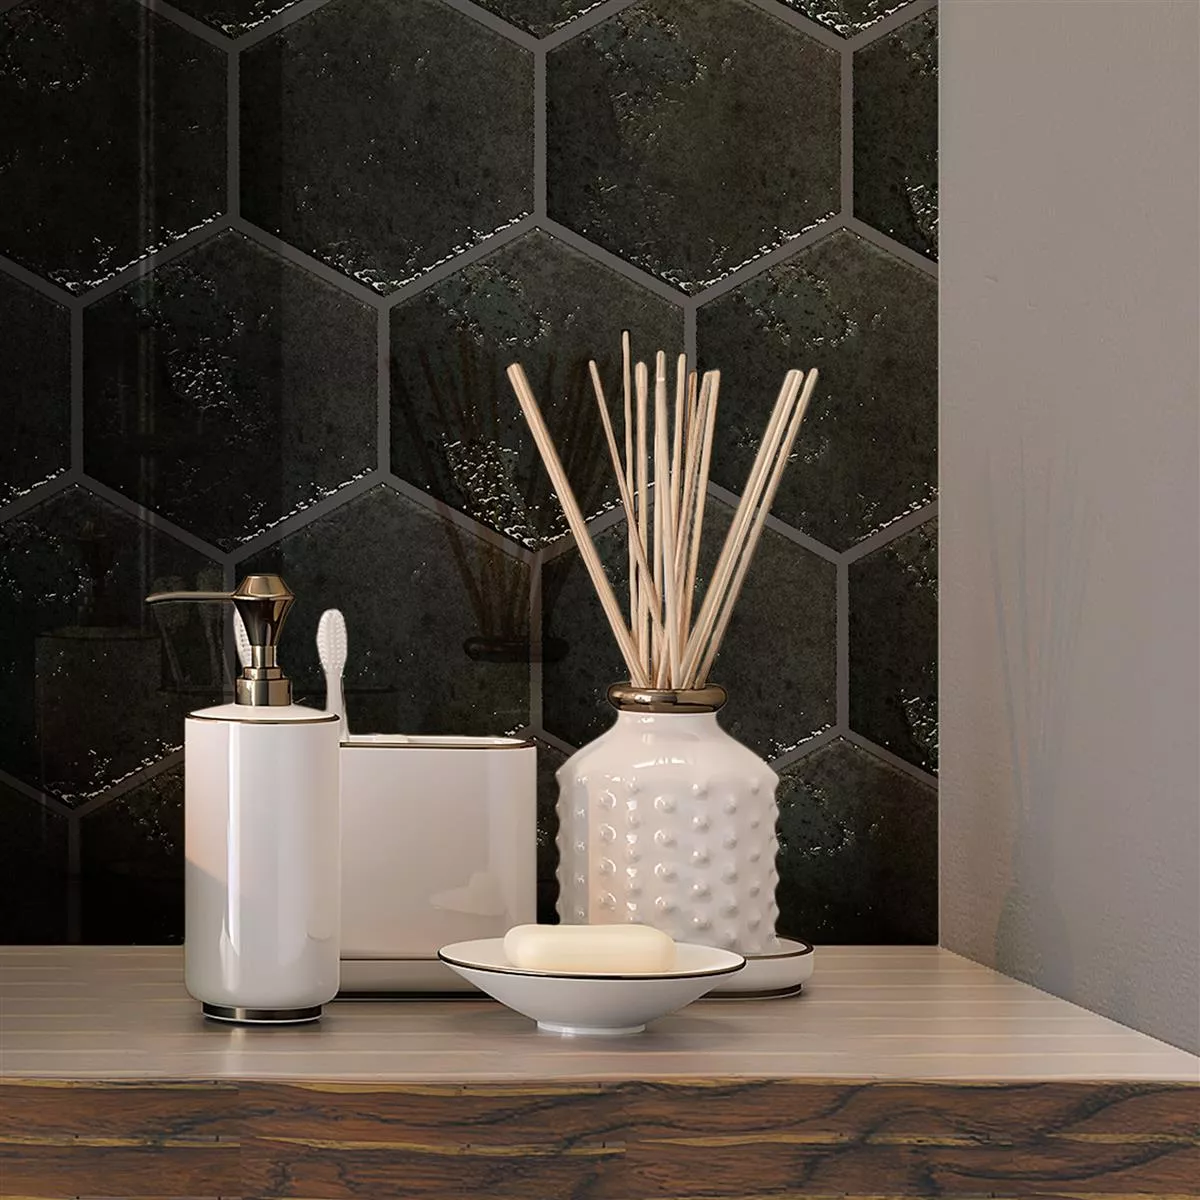 Wall Tiles Lara Glossy Waved 13x15cm Hexagon Black